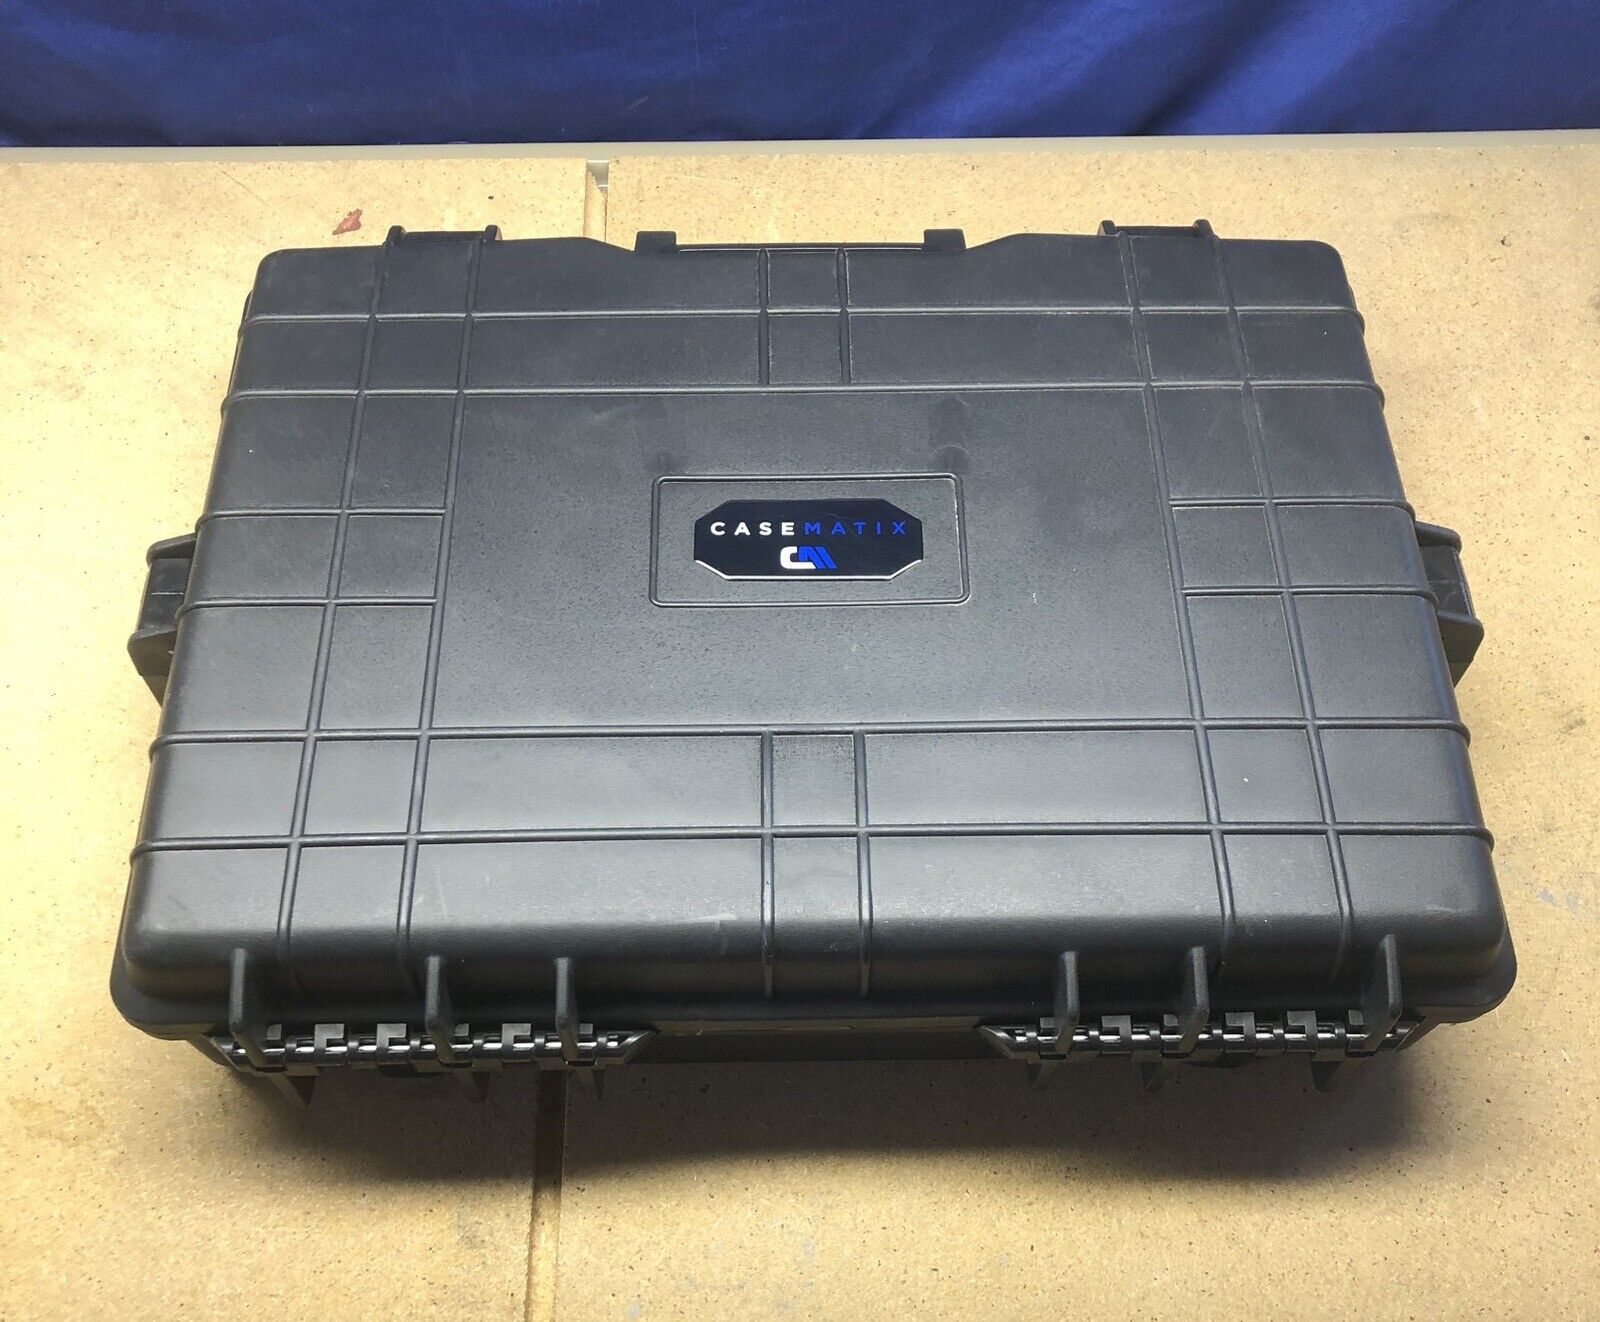 Casematix Waterproof Hard Case for 15 - 17 Gaming Laptops